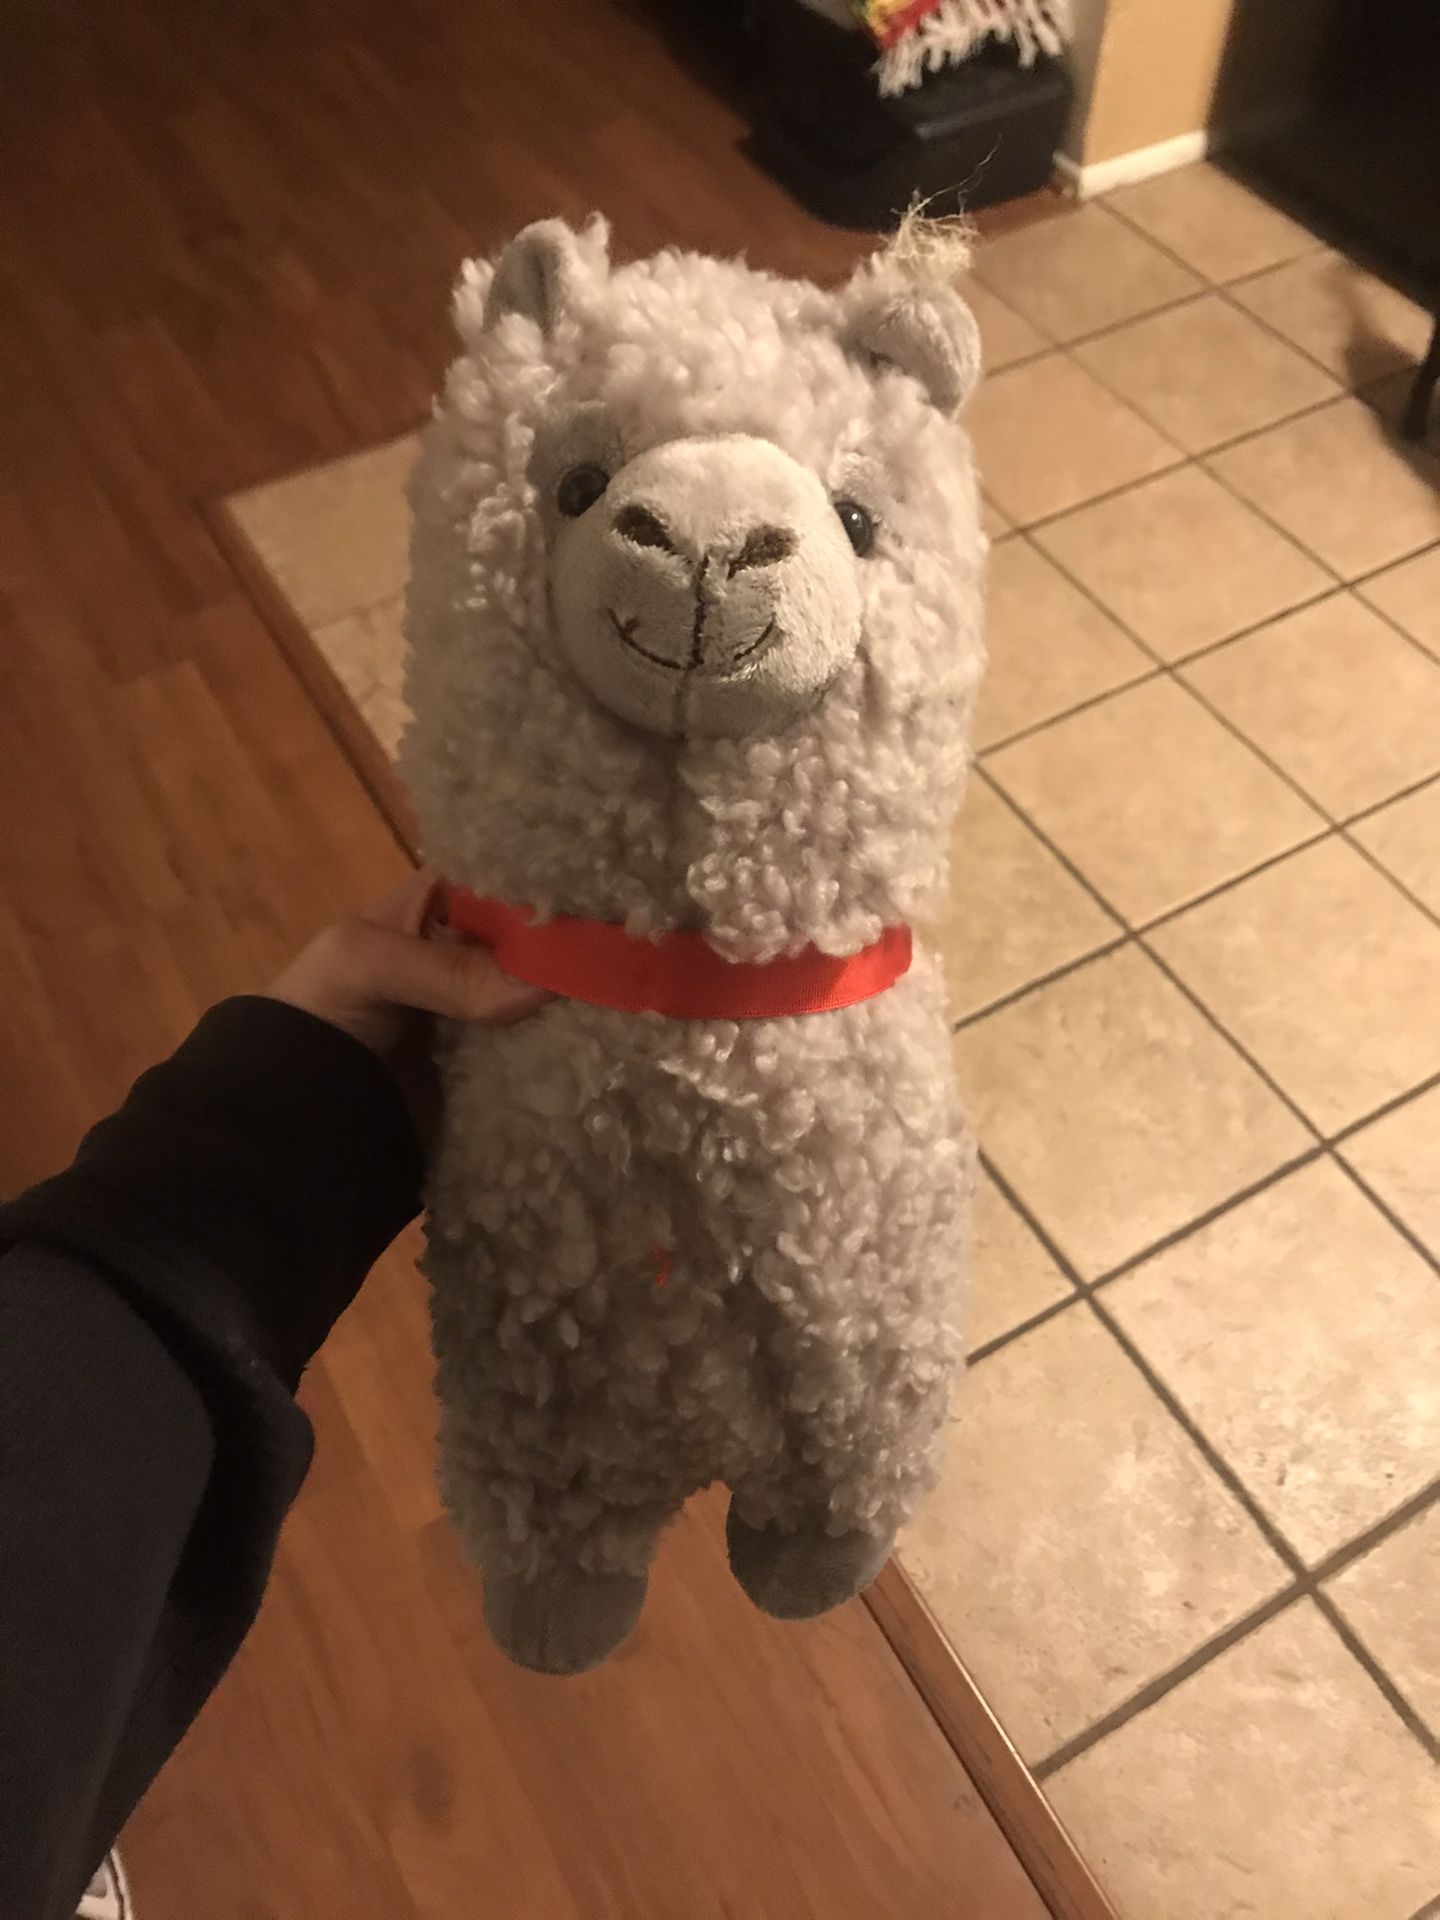 Llama stuffed animal